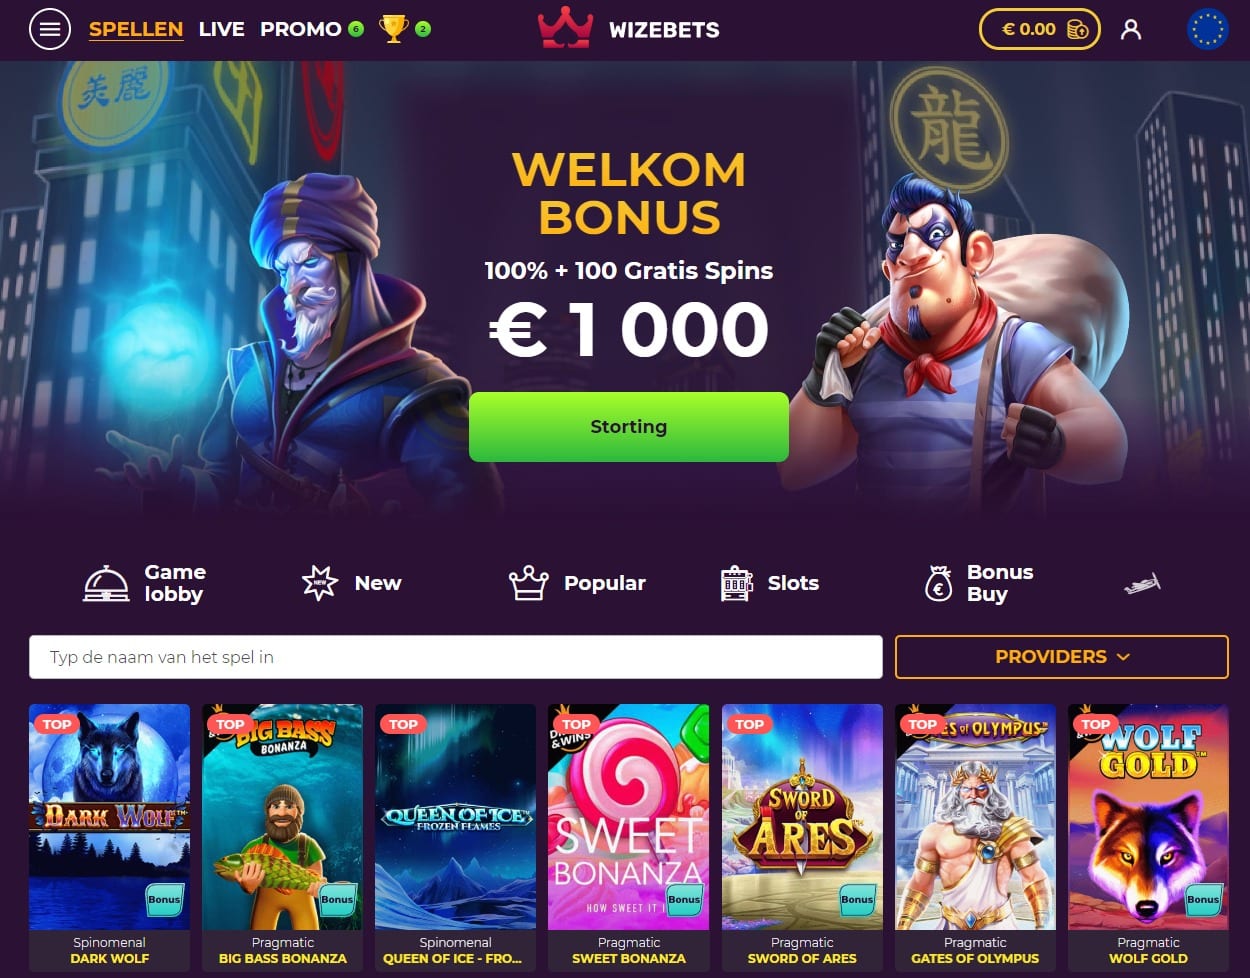 nieuwe online casino's nederland - WizeBets 